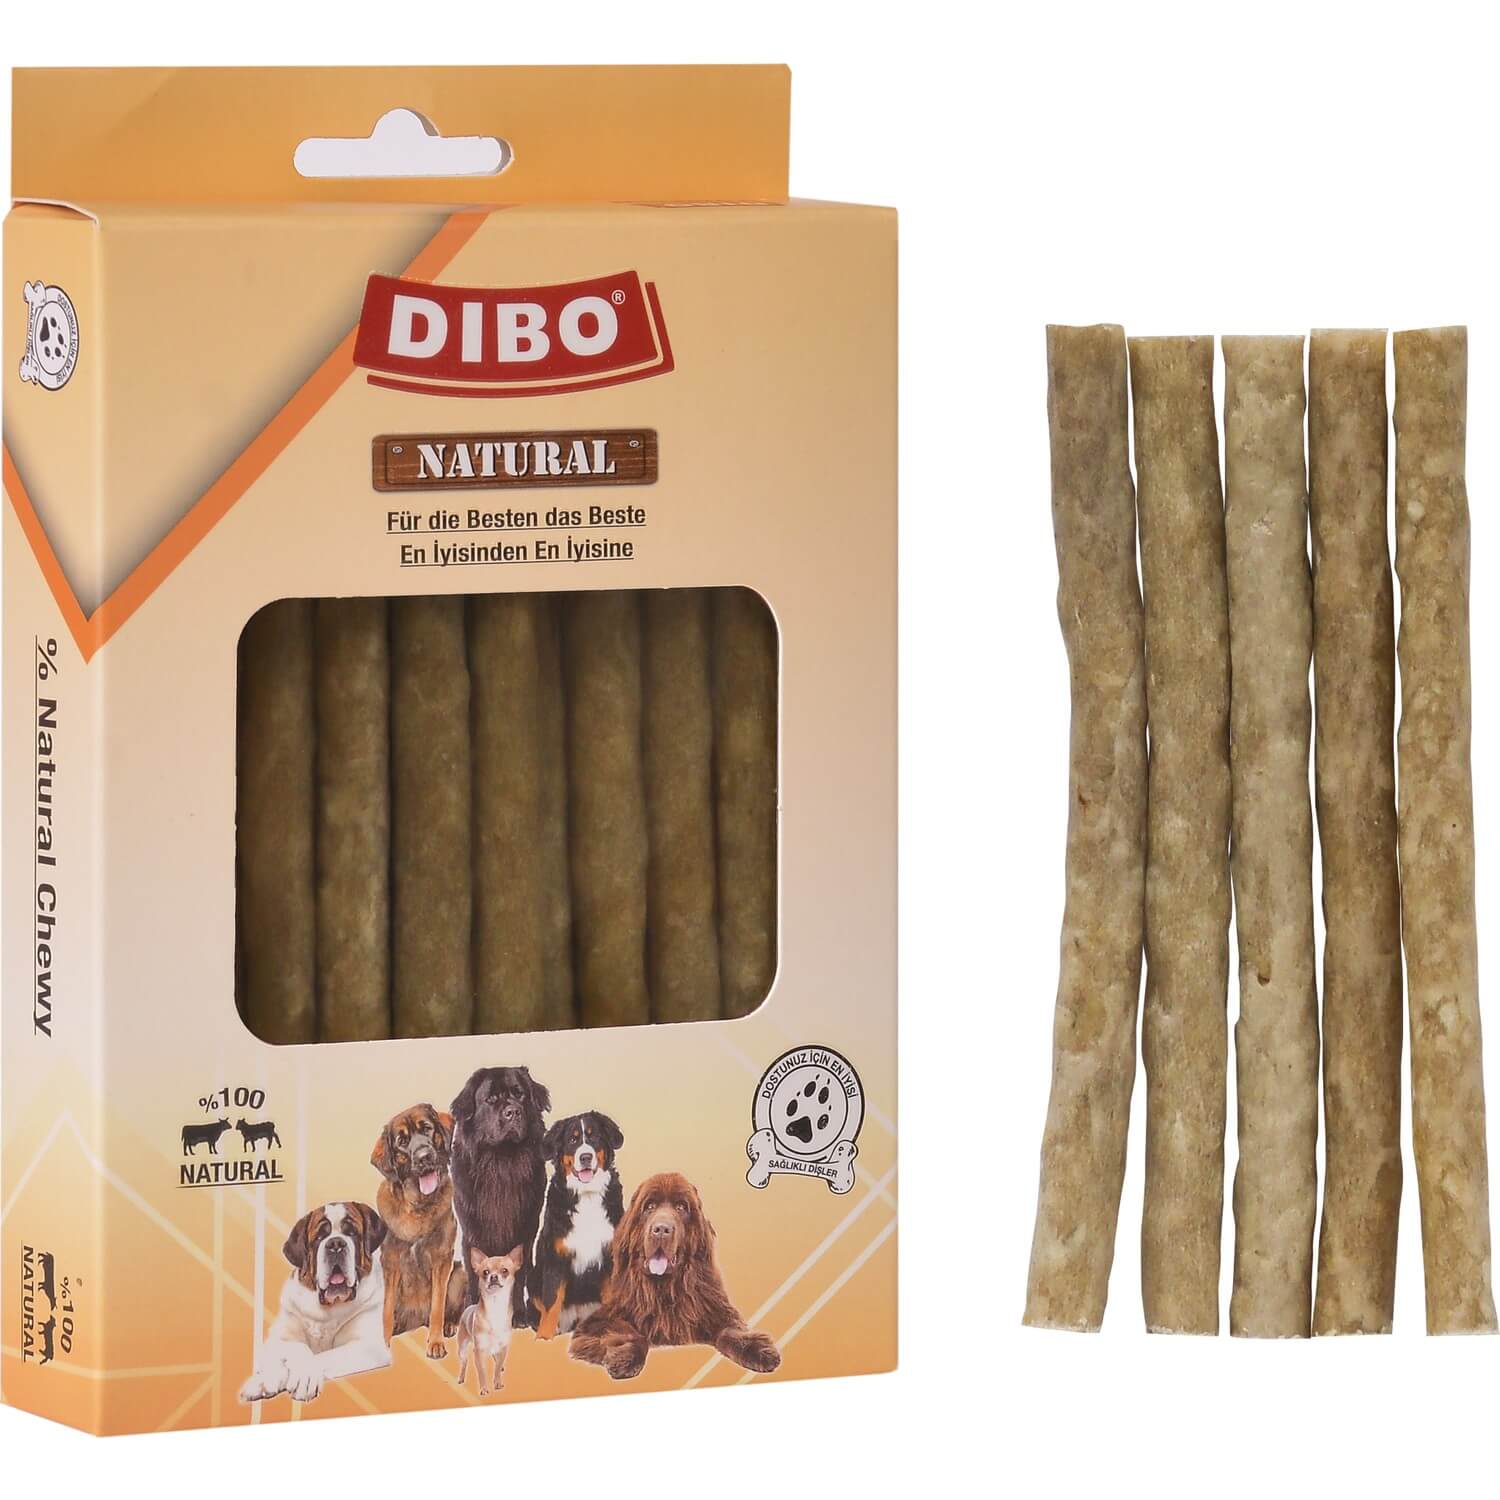 Dibo Munchy Çubuk Köpek Çiğneme Kemiği 100 gr | 19,29 TL